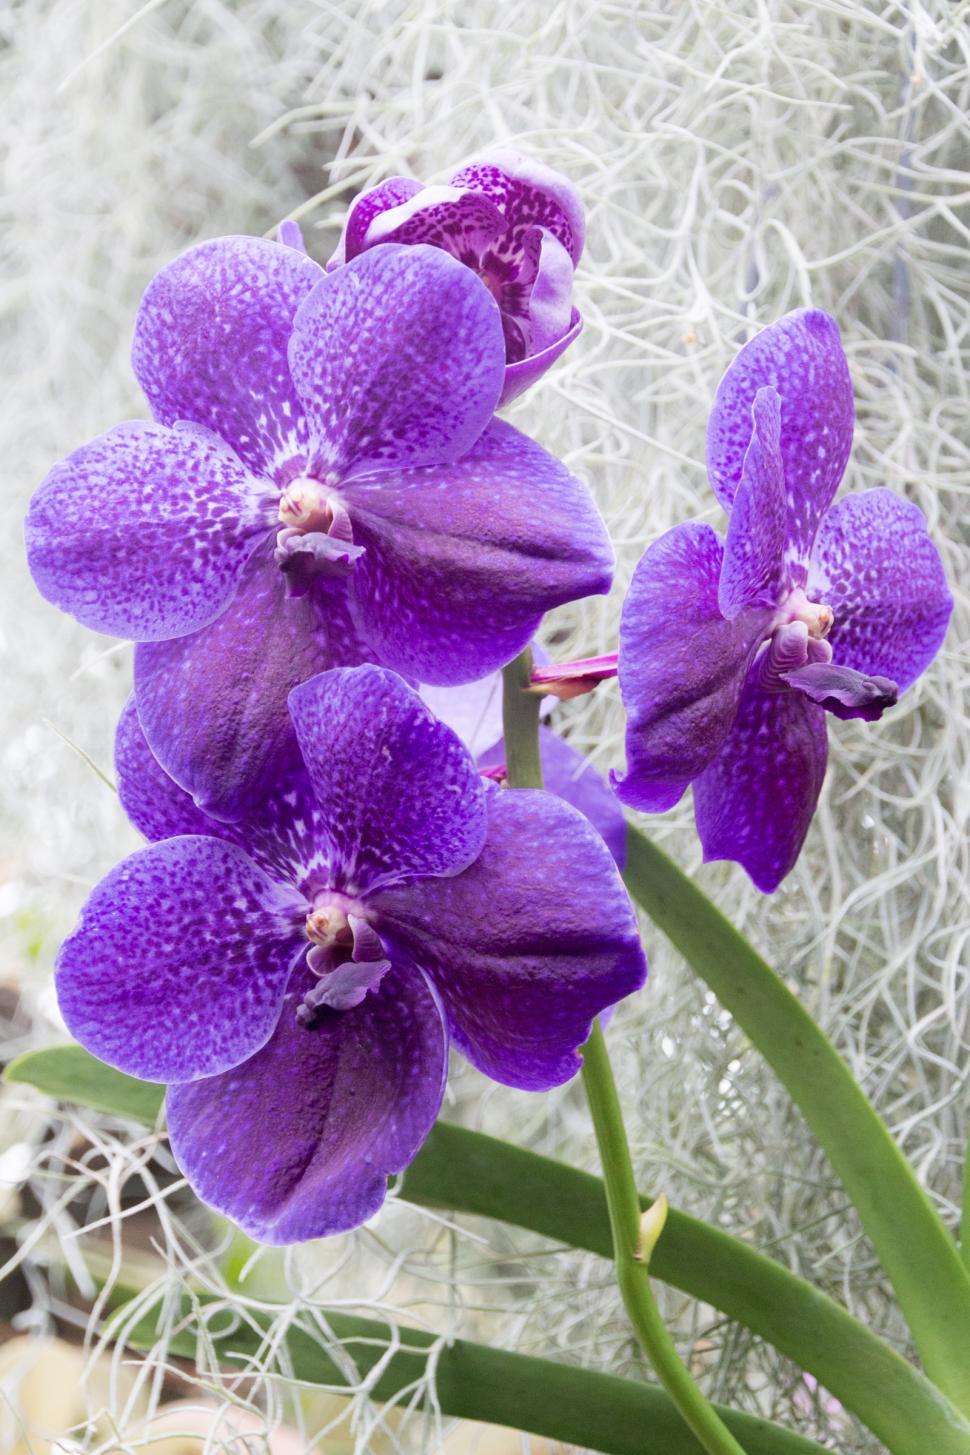 Free Image of Cluster of Blue Vanda Orchid Flowers 